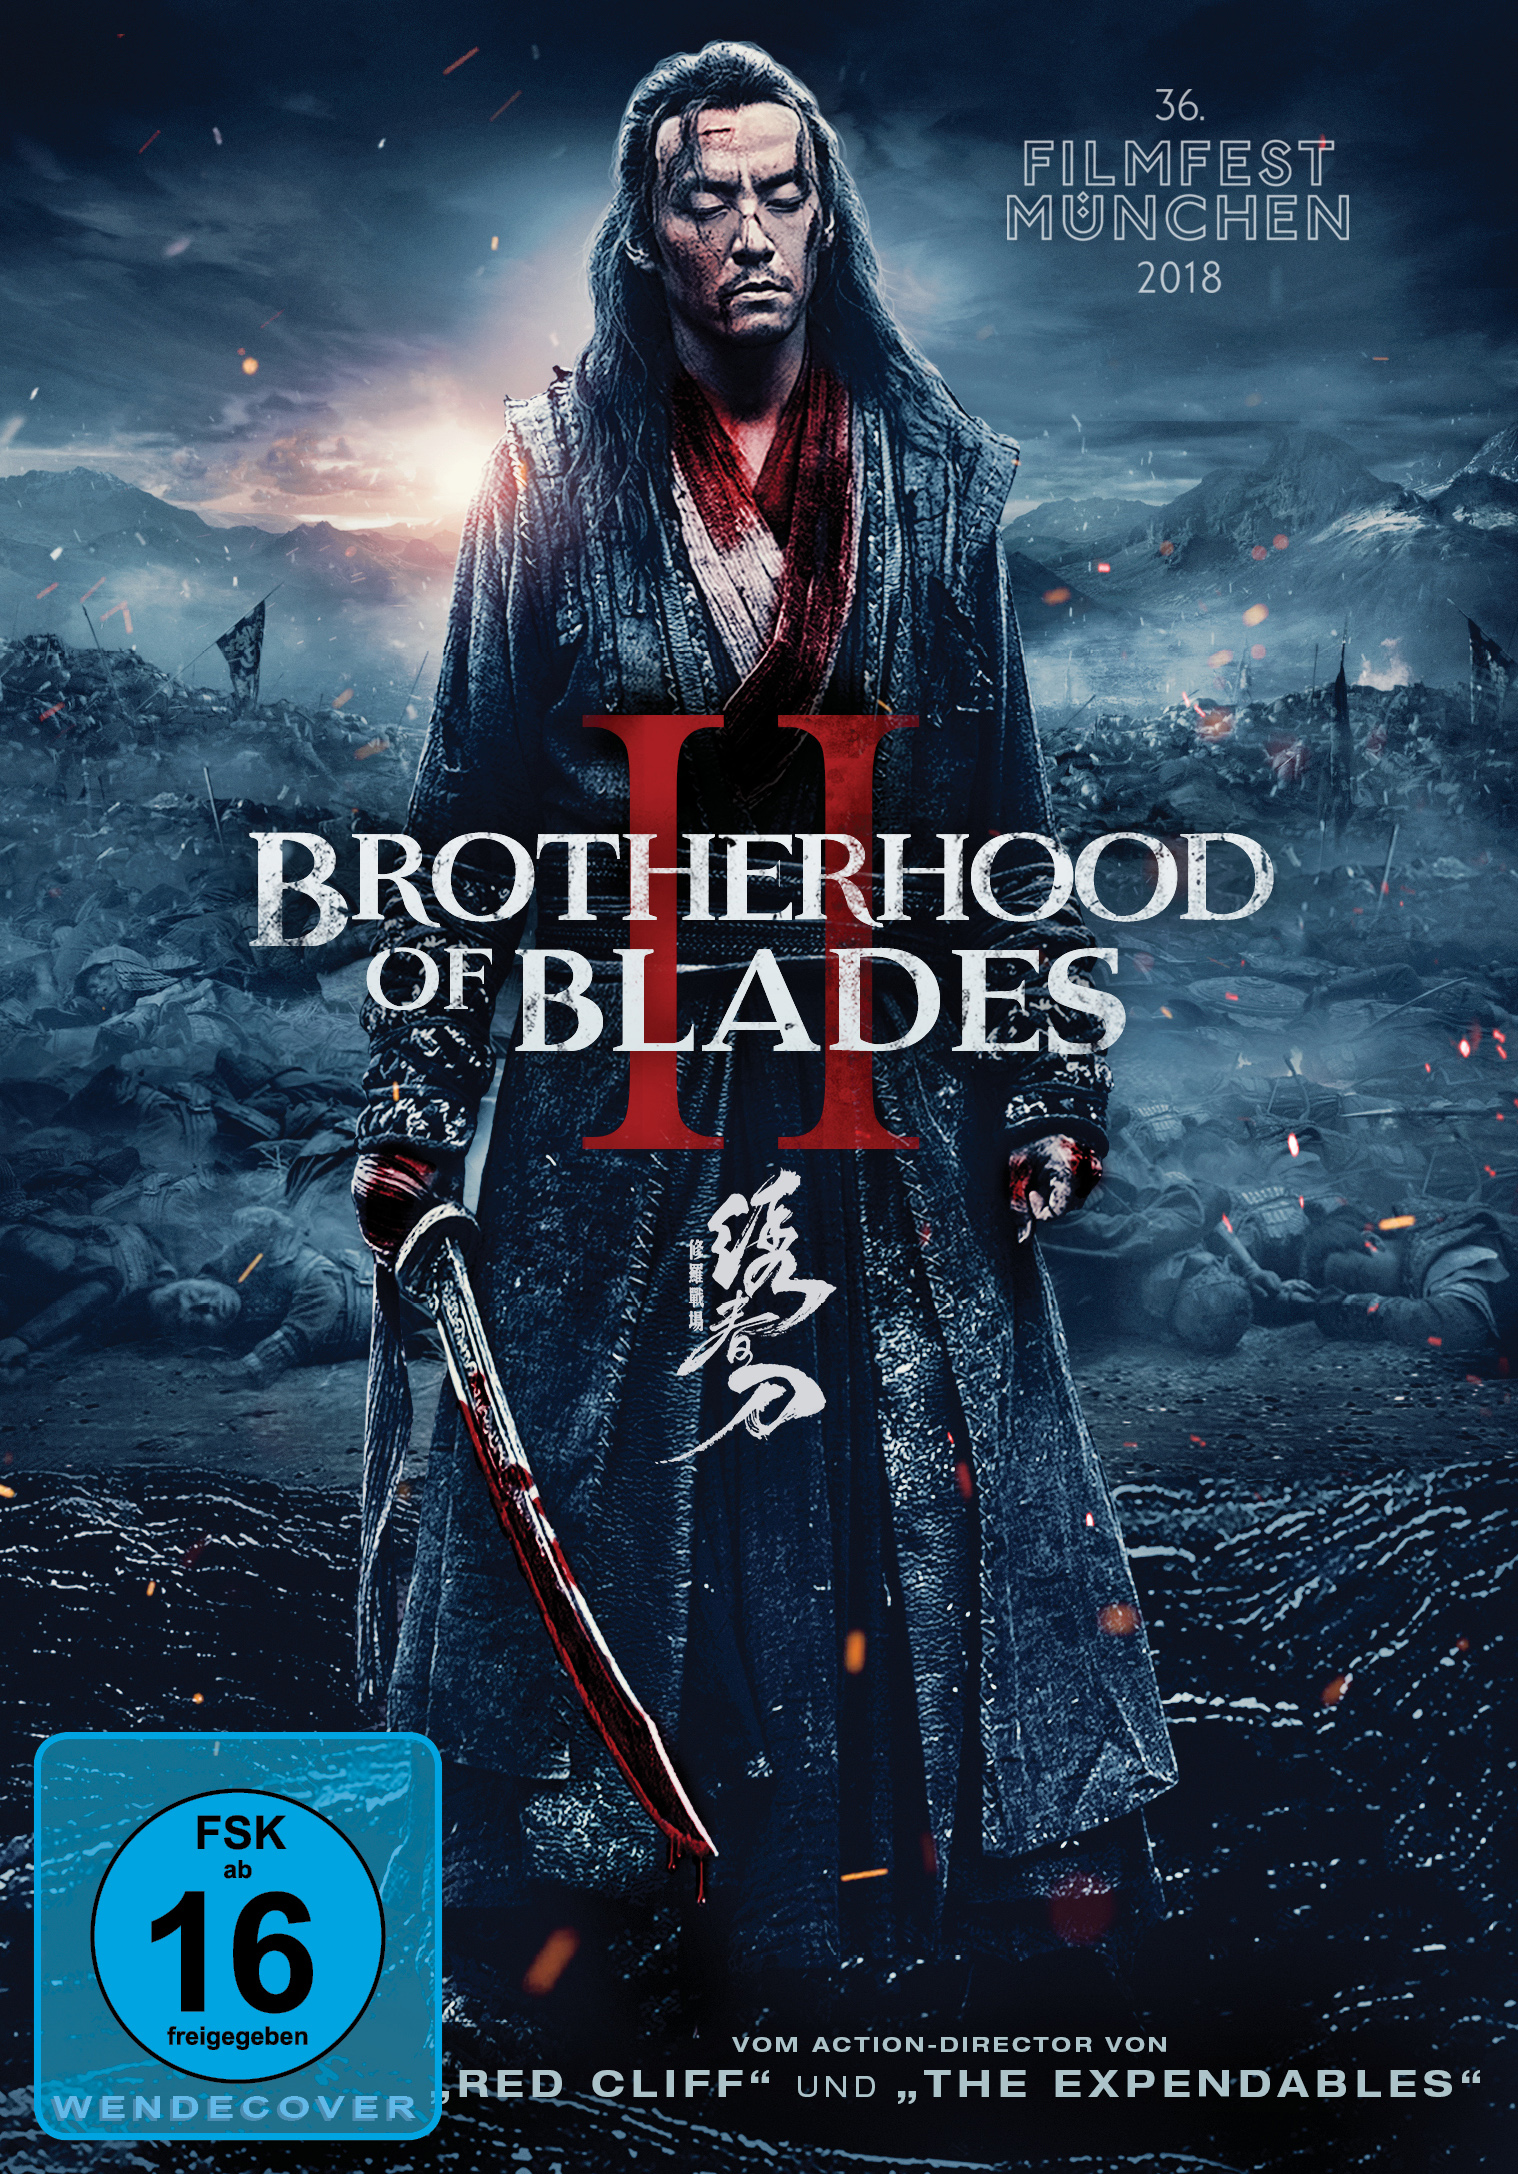 Blades 2 DVD Of Brotherhood